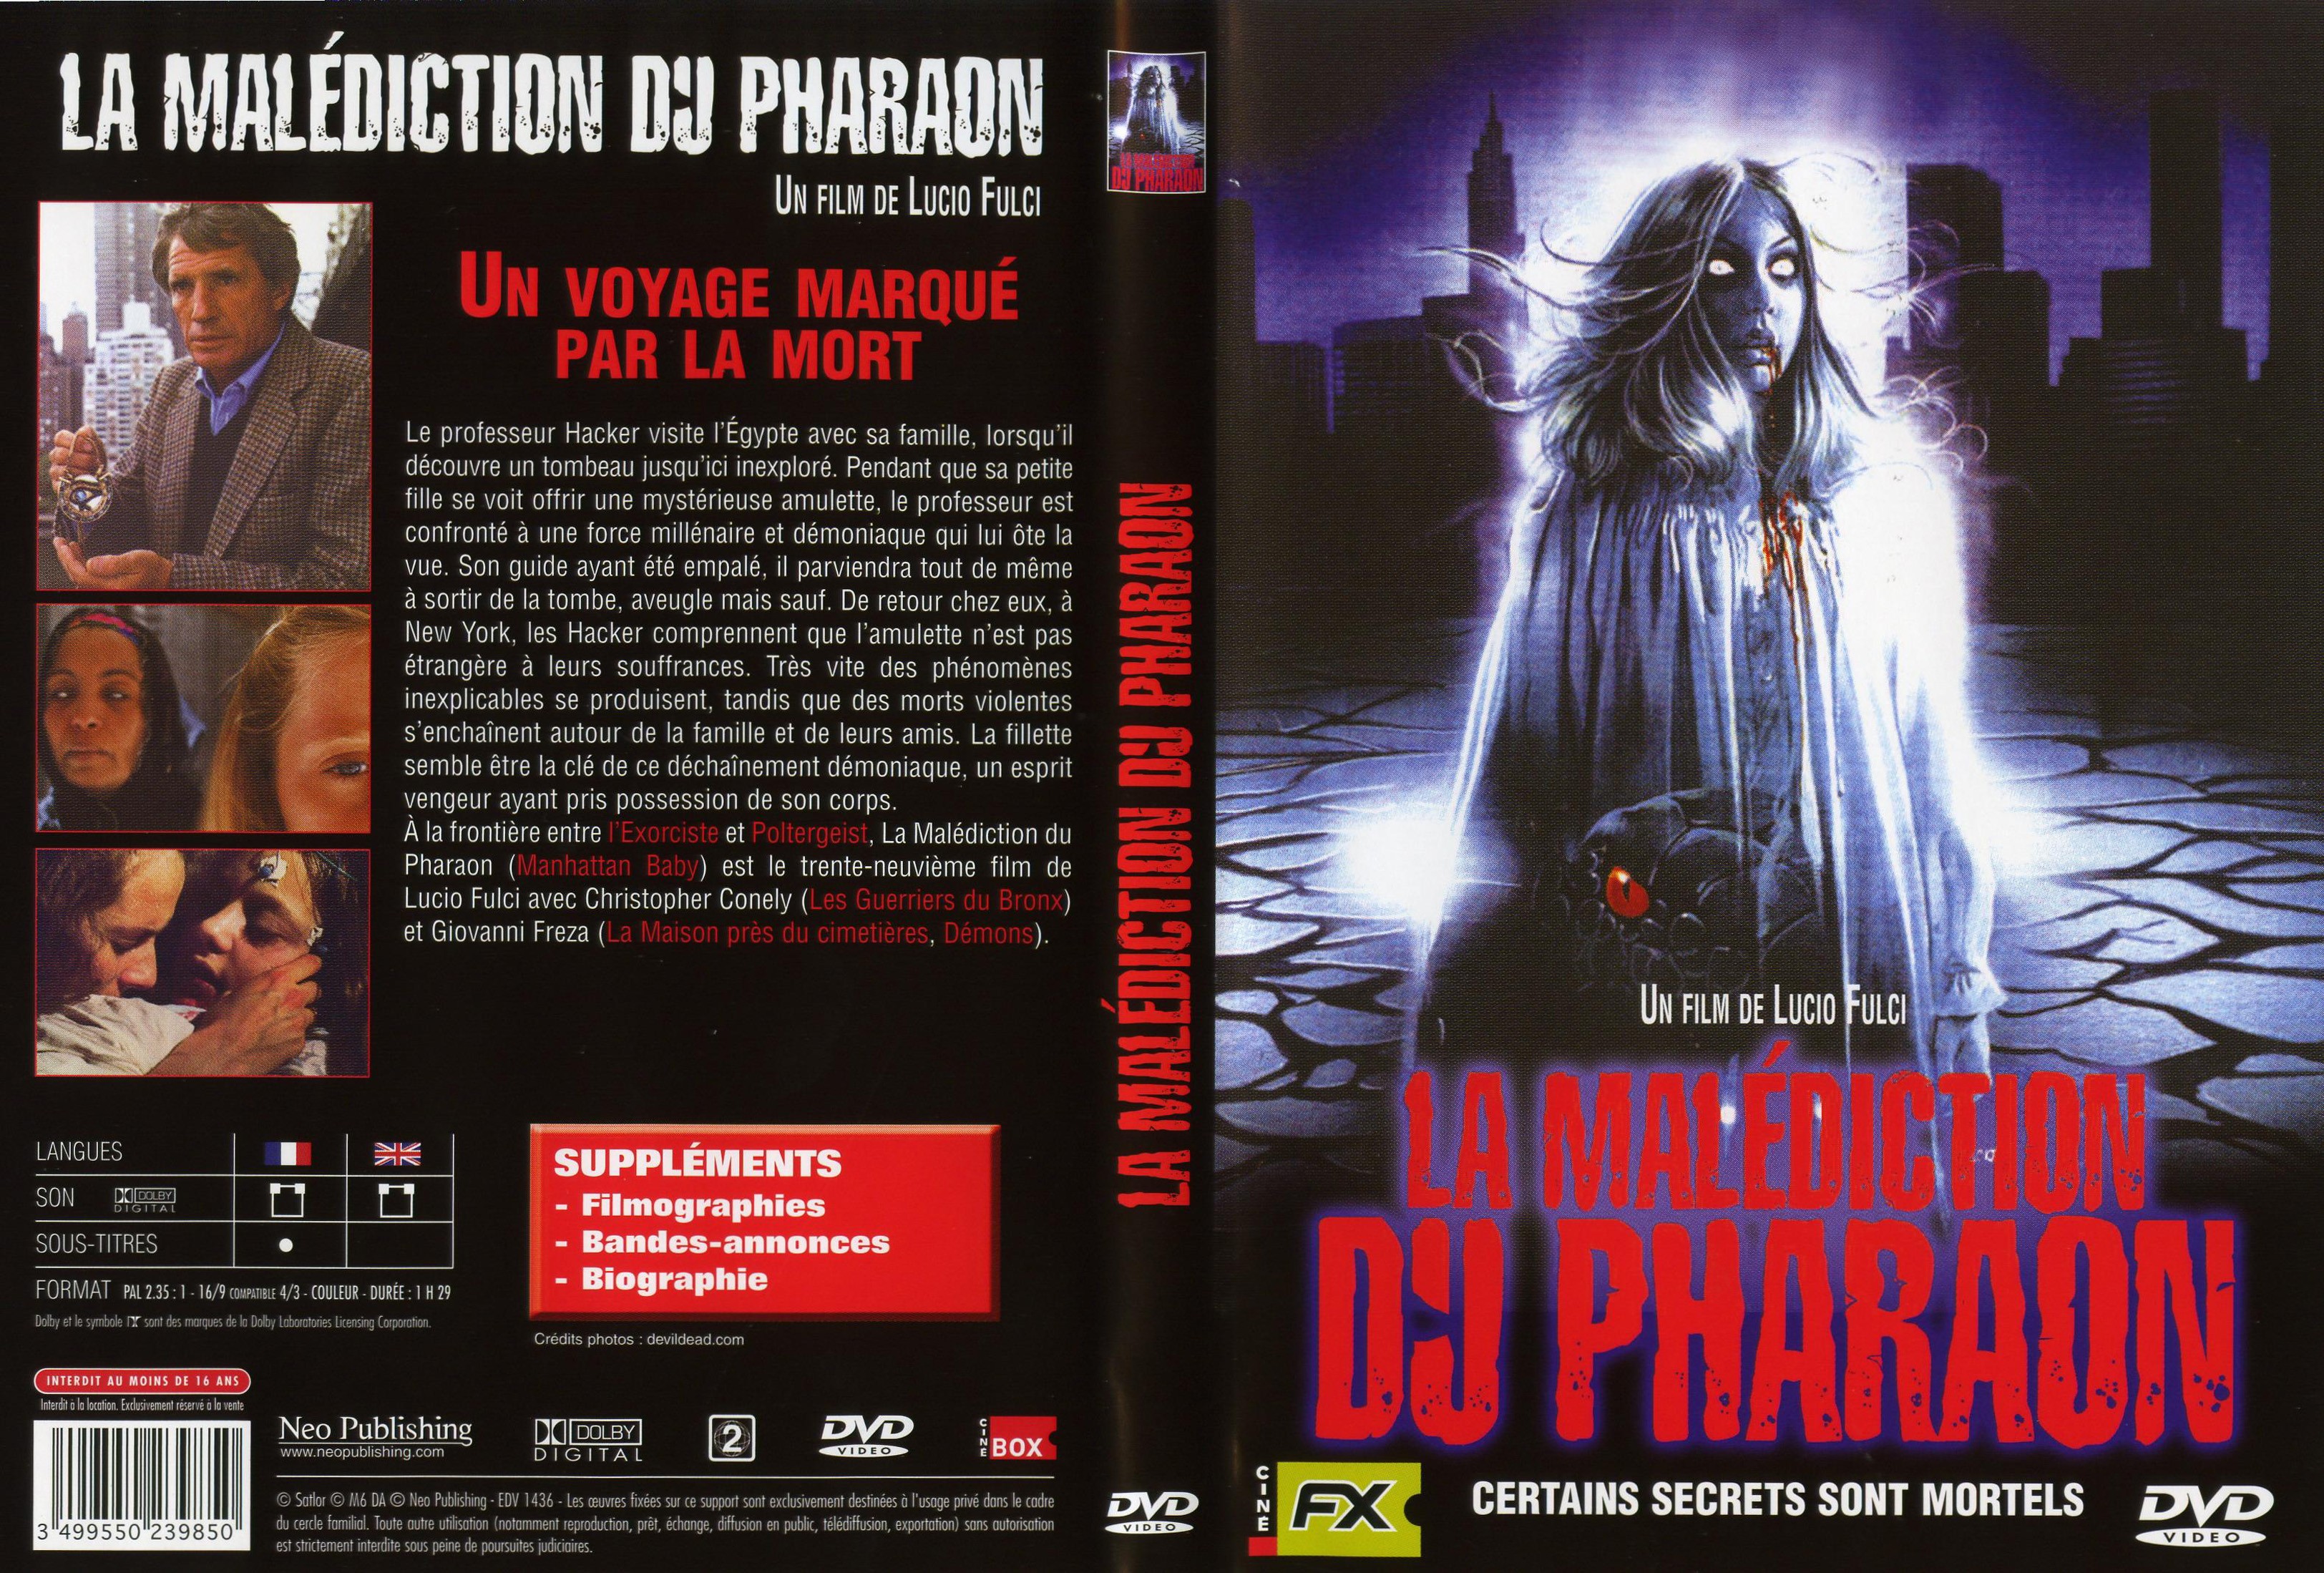 Jaquette DVD La malediction du pharaon